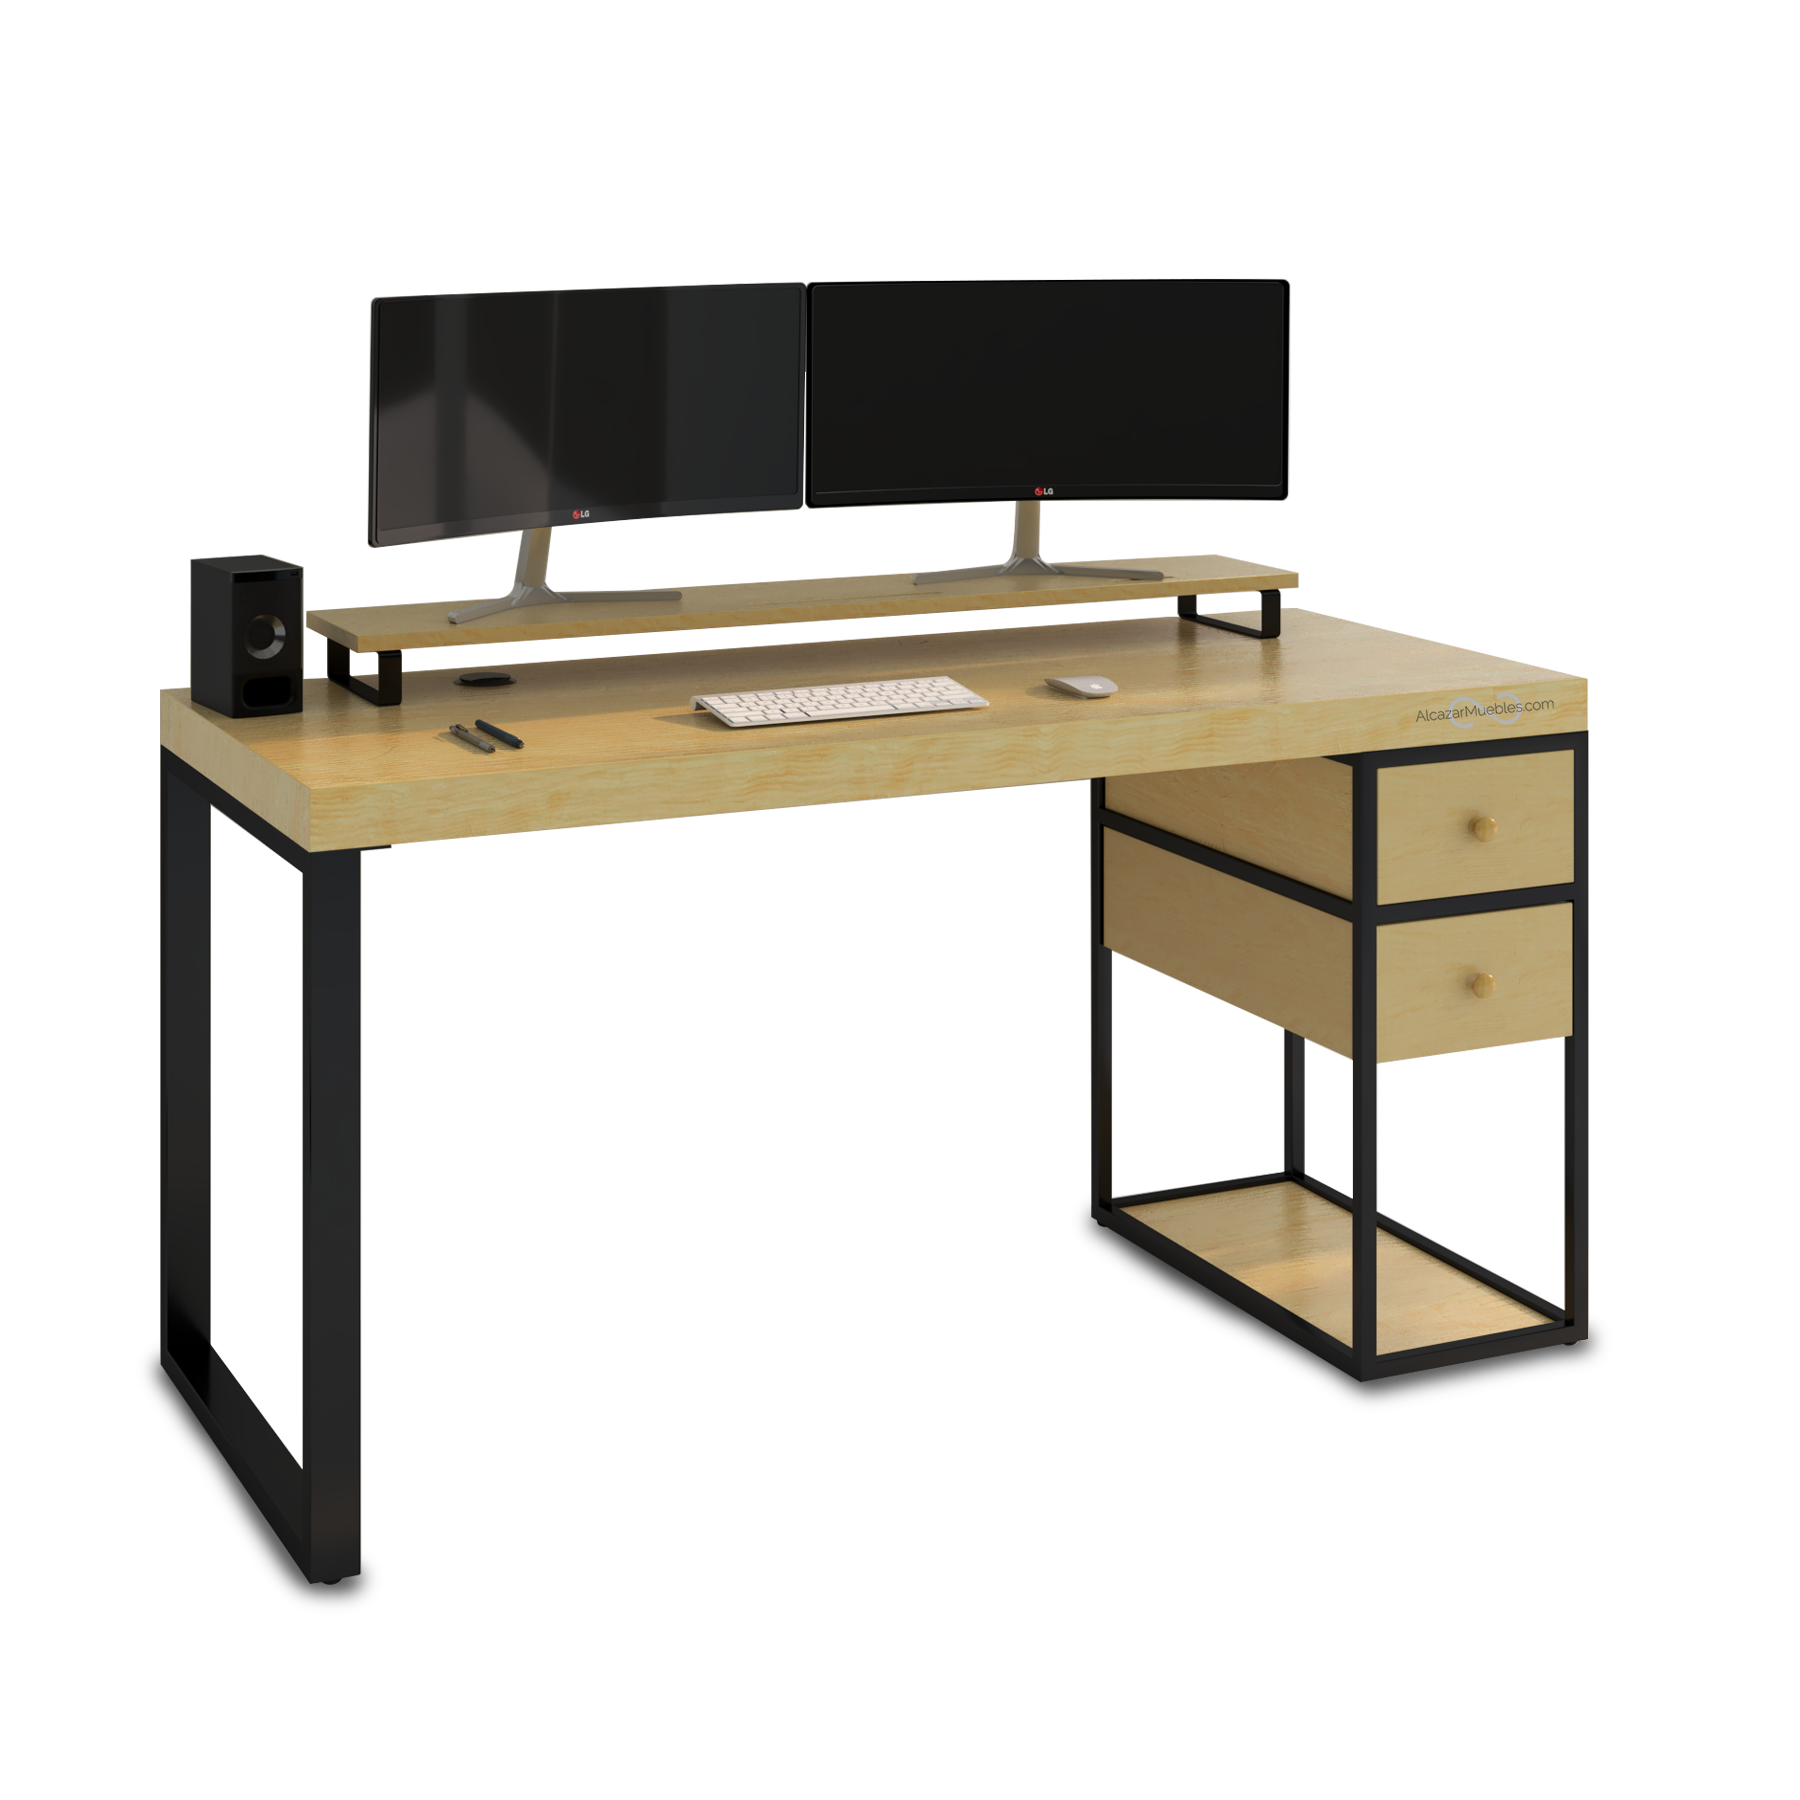 Soporte para 2 monitores - Repisa para escritorio en madera